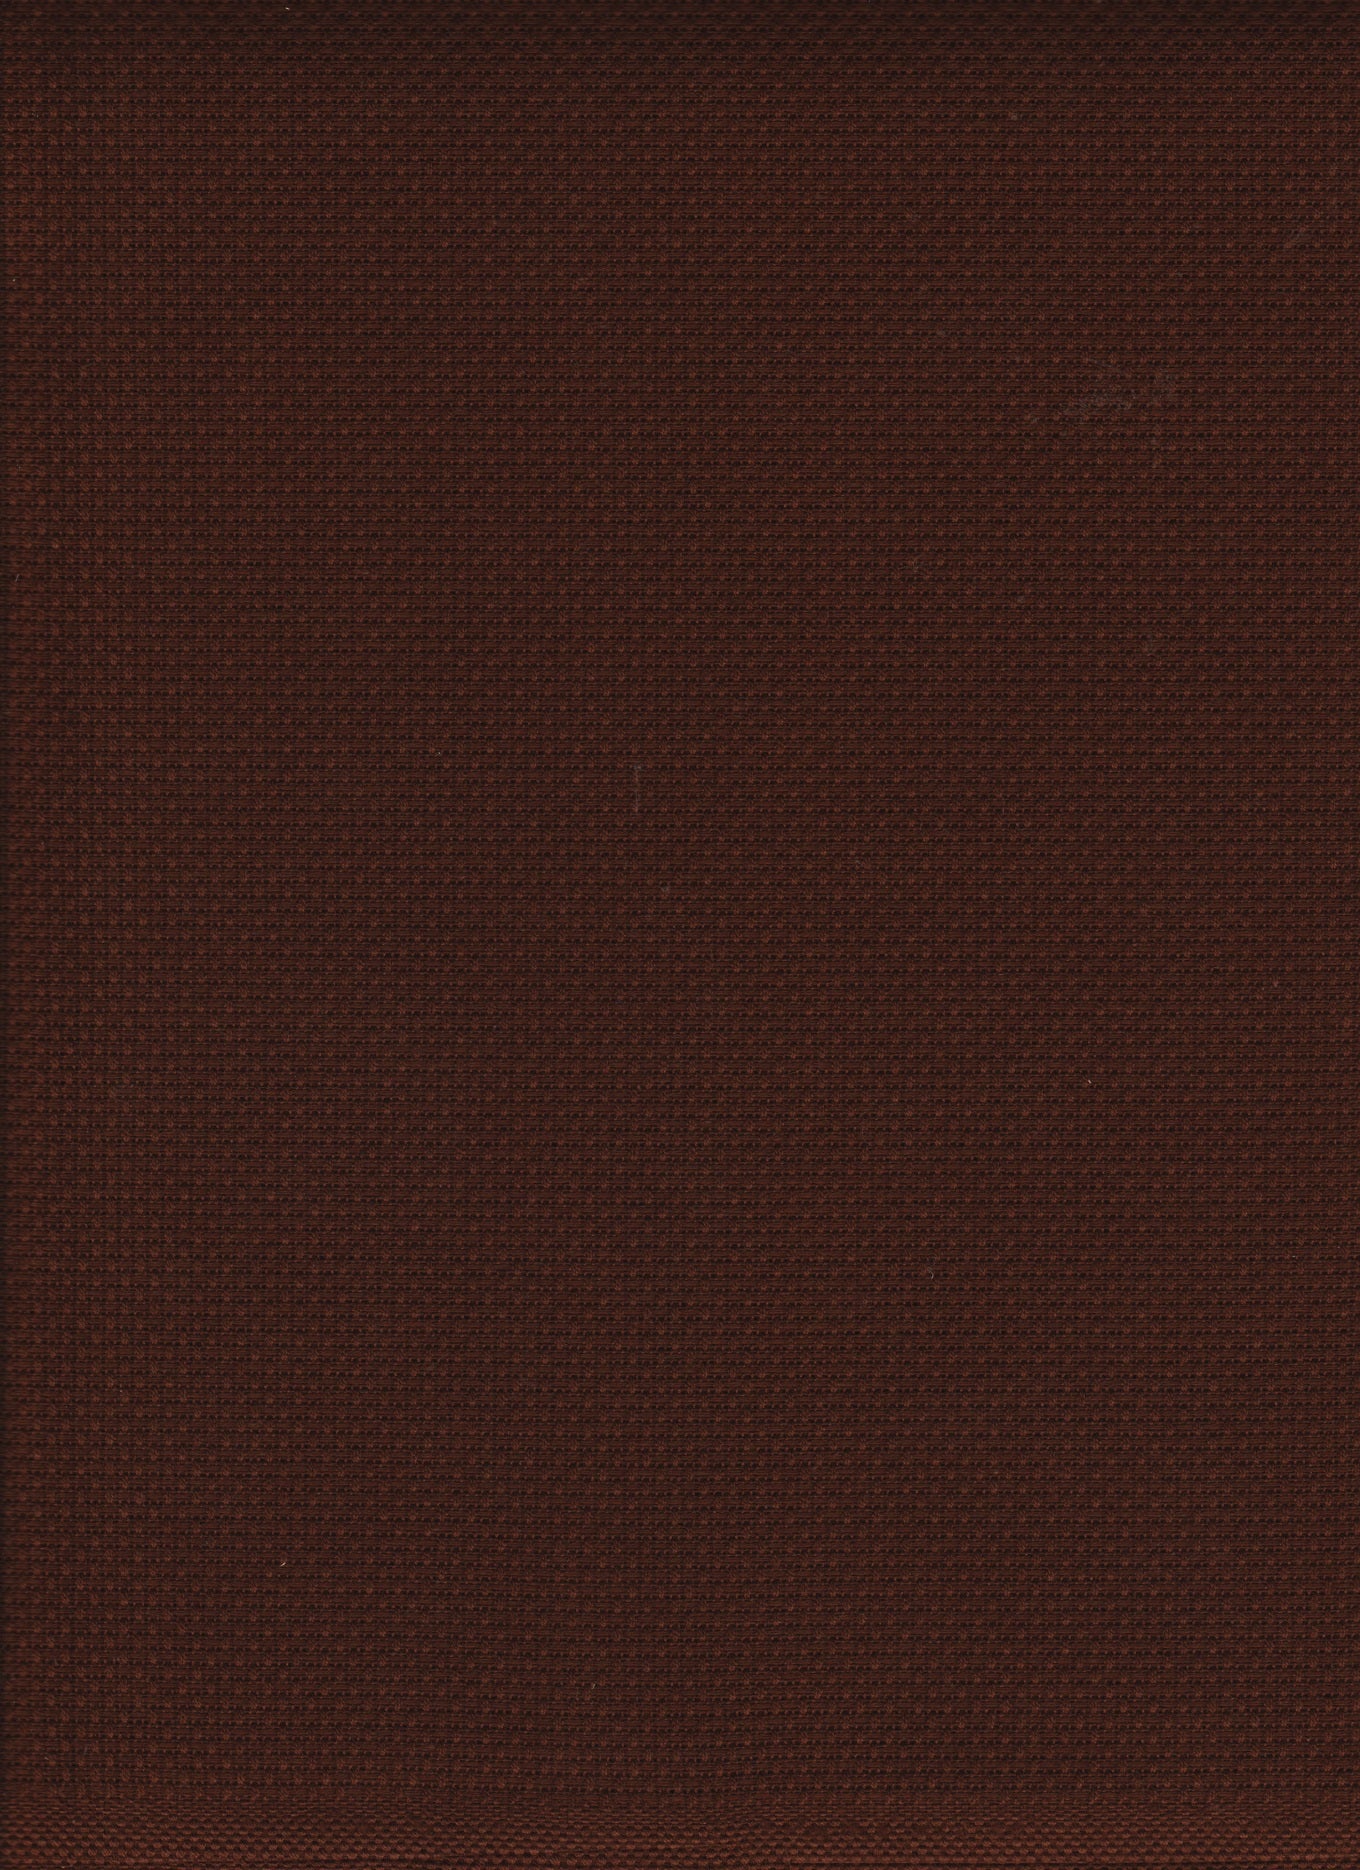 Wichelt Aida 14ct 36x50 Chocolate Brown Fabric